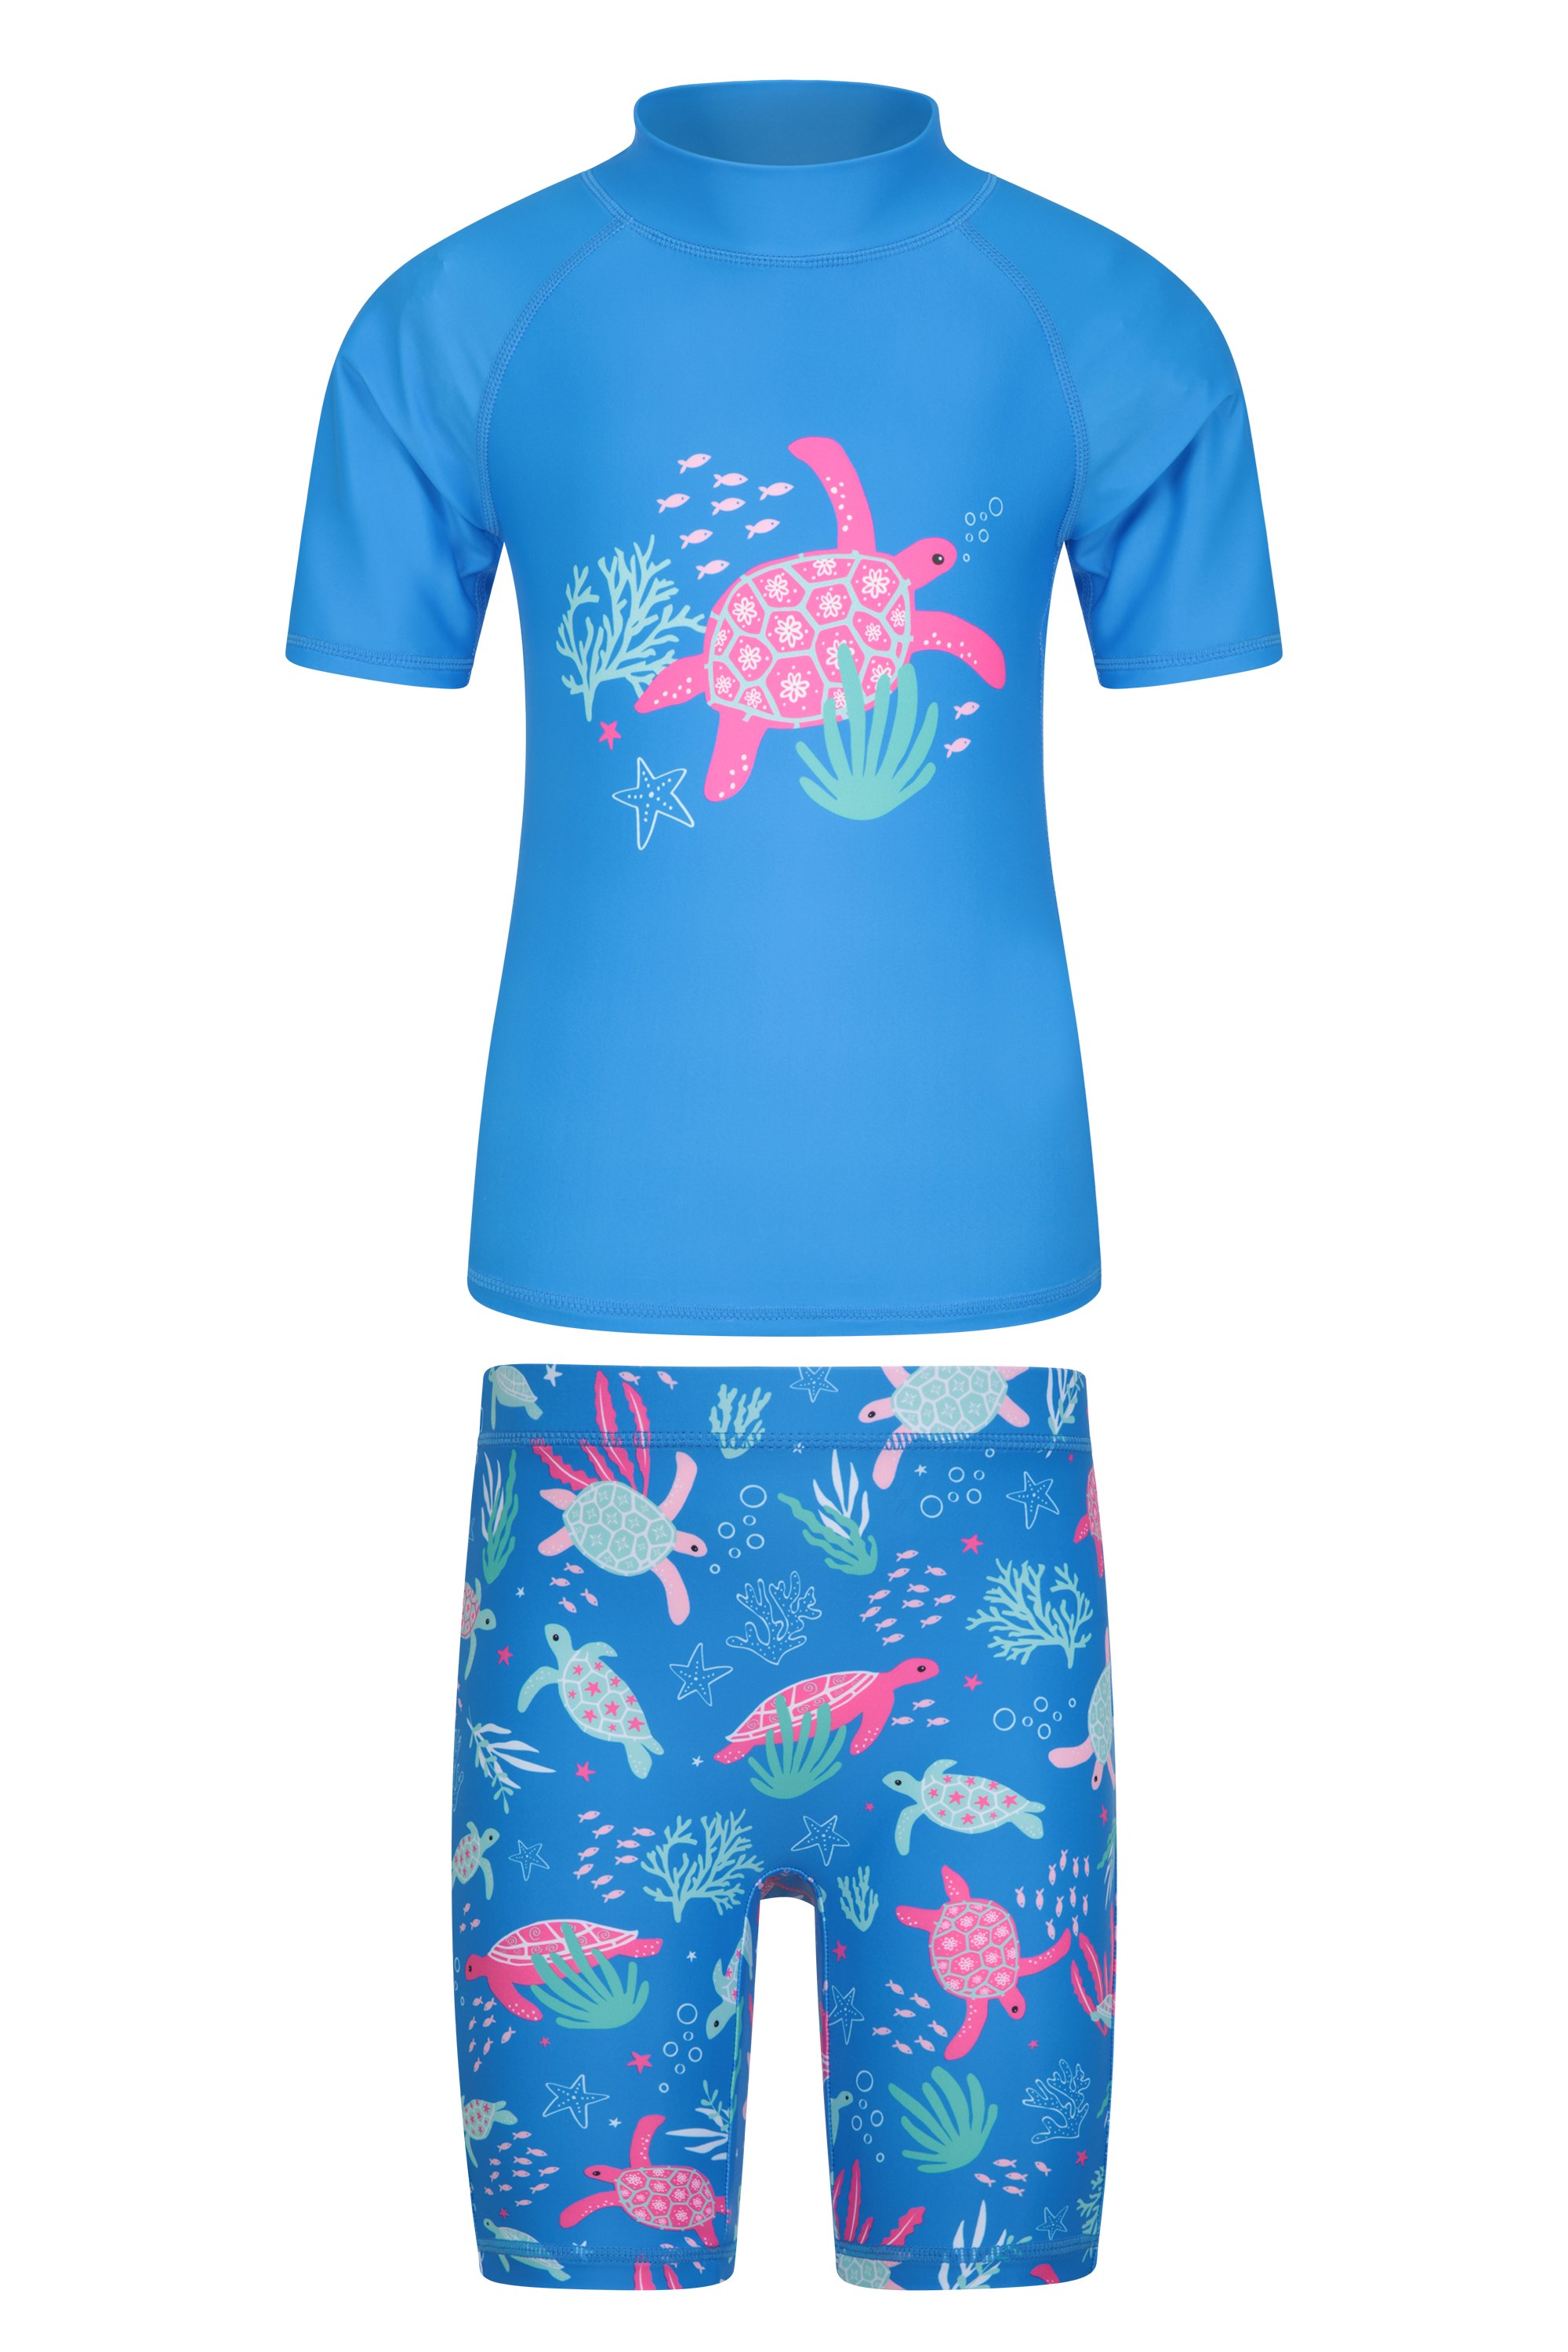 Mountain Warehouse Kids Printed Rash Guard & Shorts UPF50 Swimwear